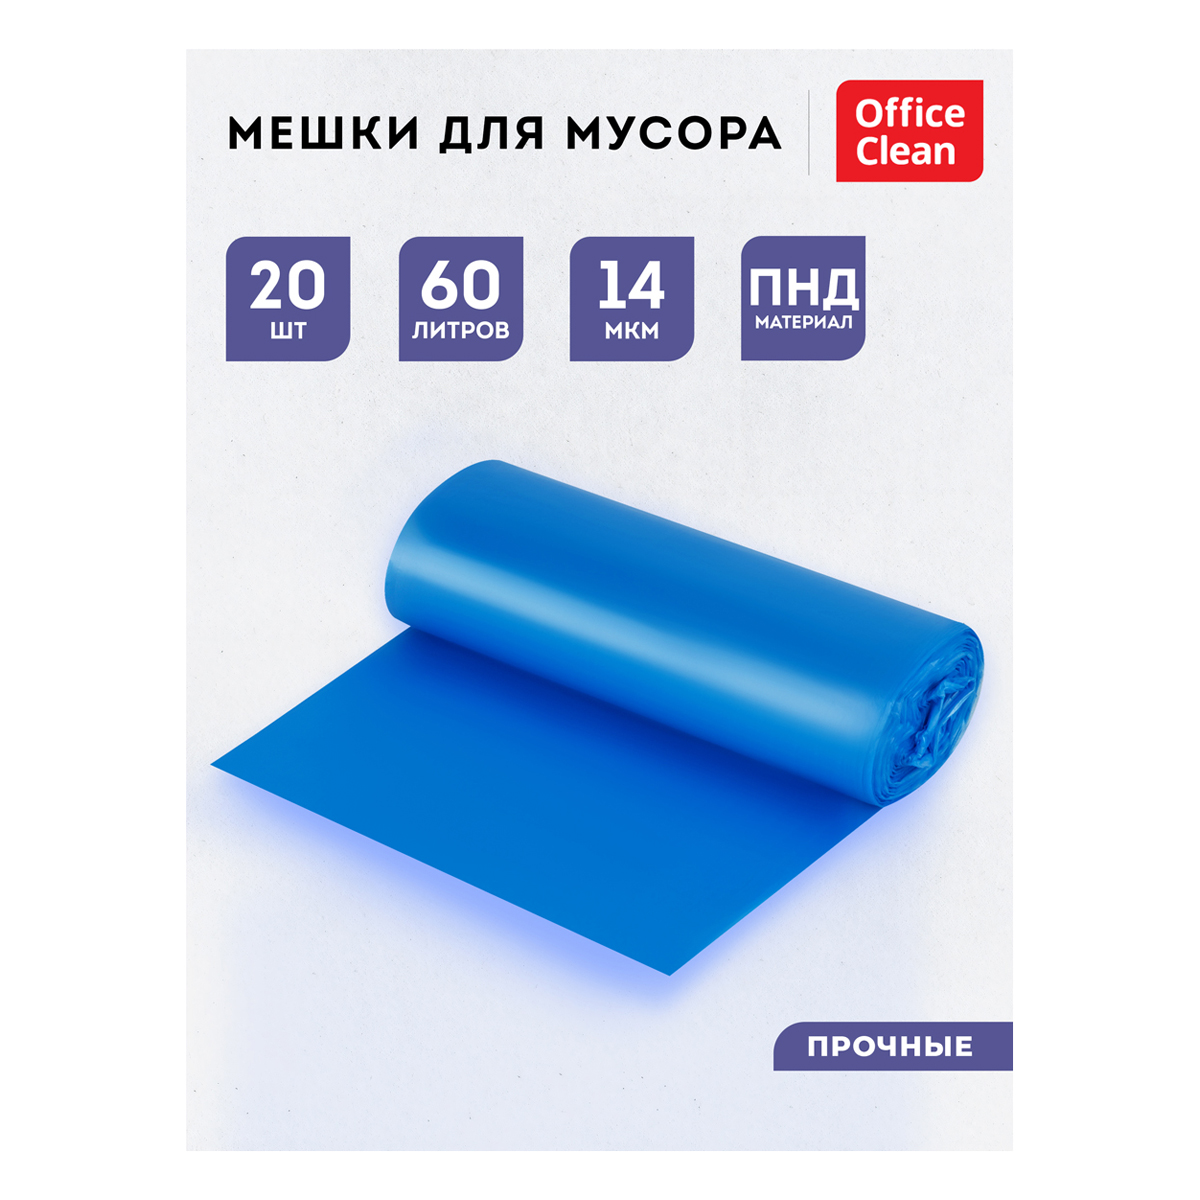 Мешки для мусора 60л OfficeClean ПНД, 60*76см, 14мкм, 20шт., прочные, синие, в рулоне, с ушками